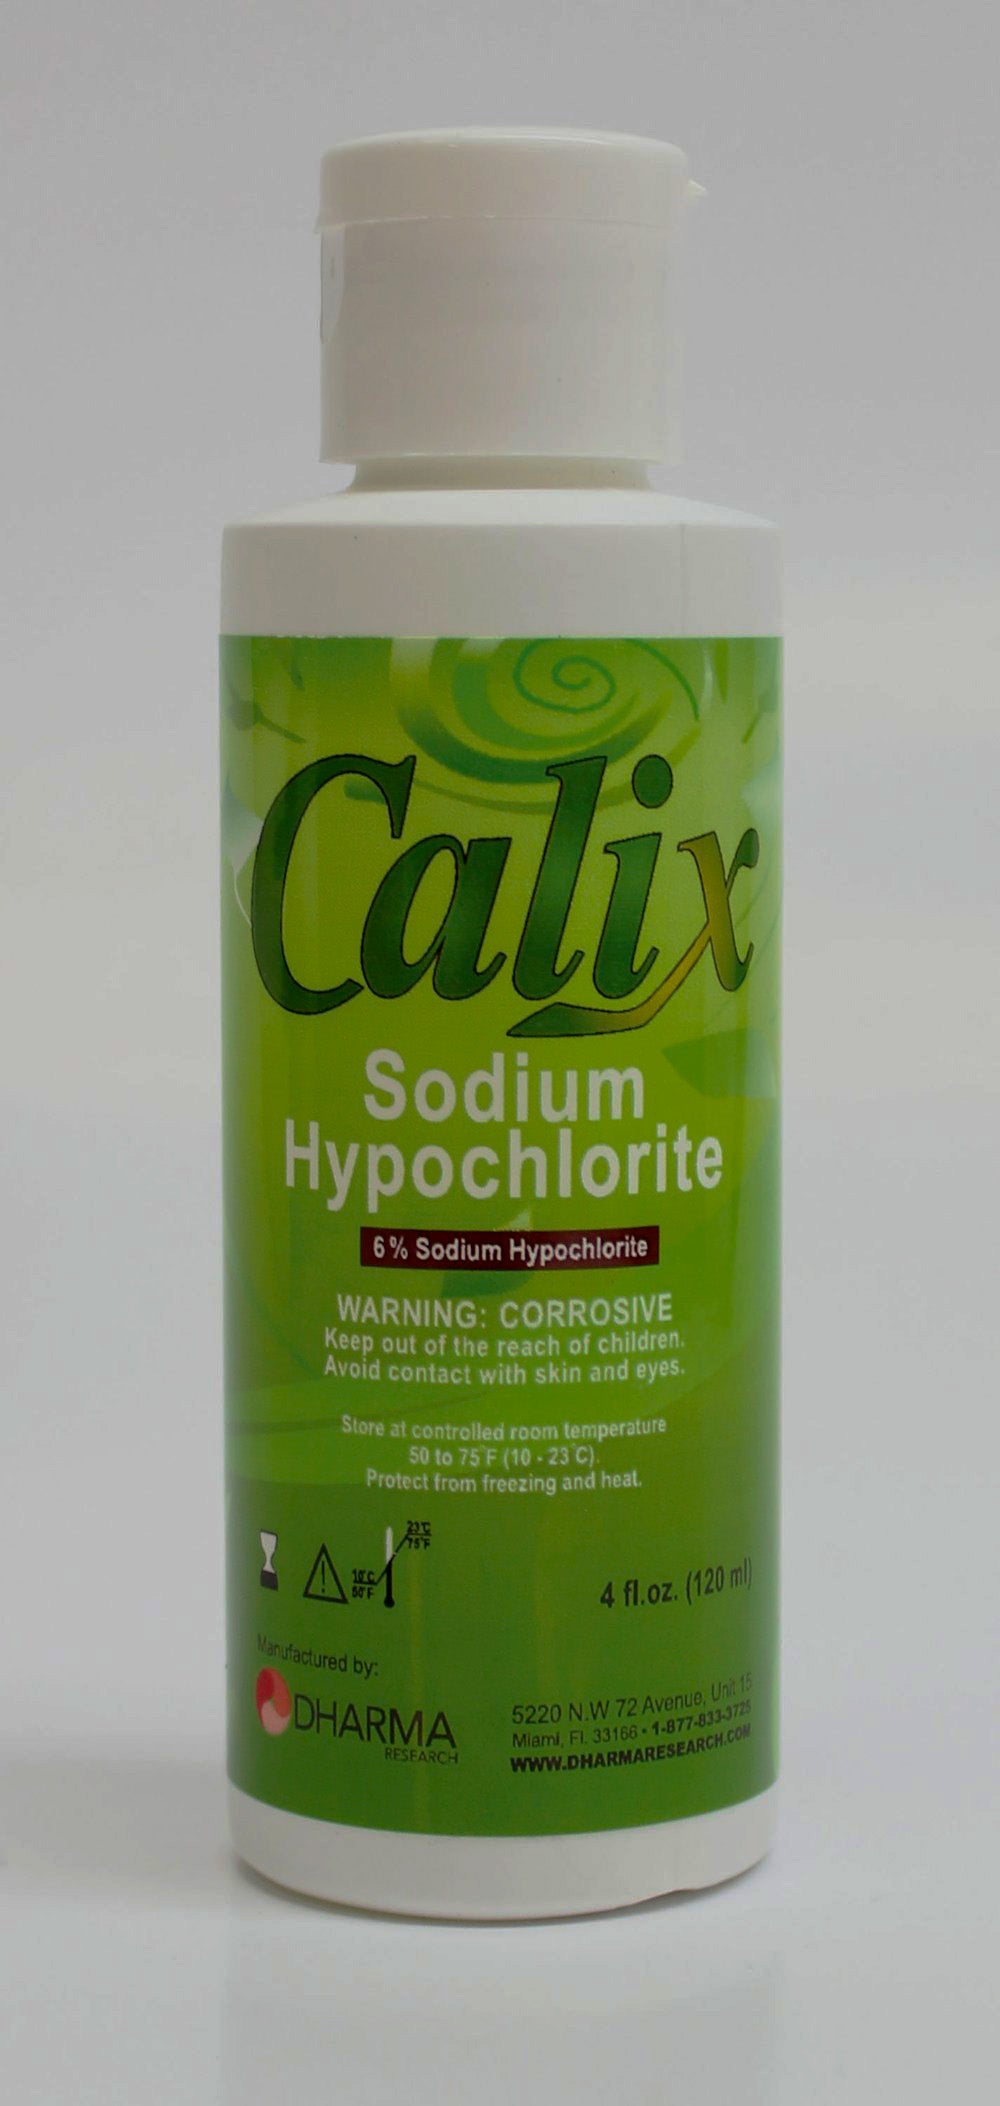 Calix 6% Sodium Hypochlorite Solution